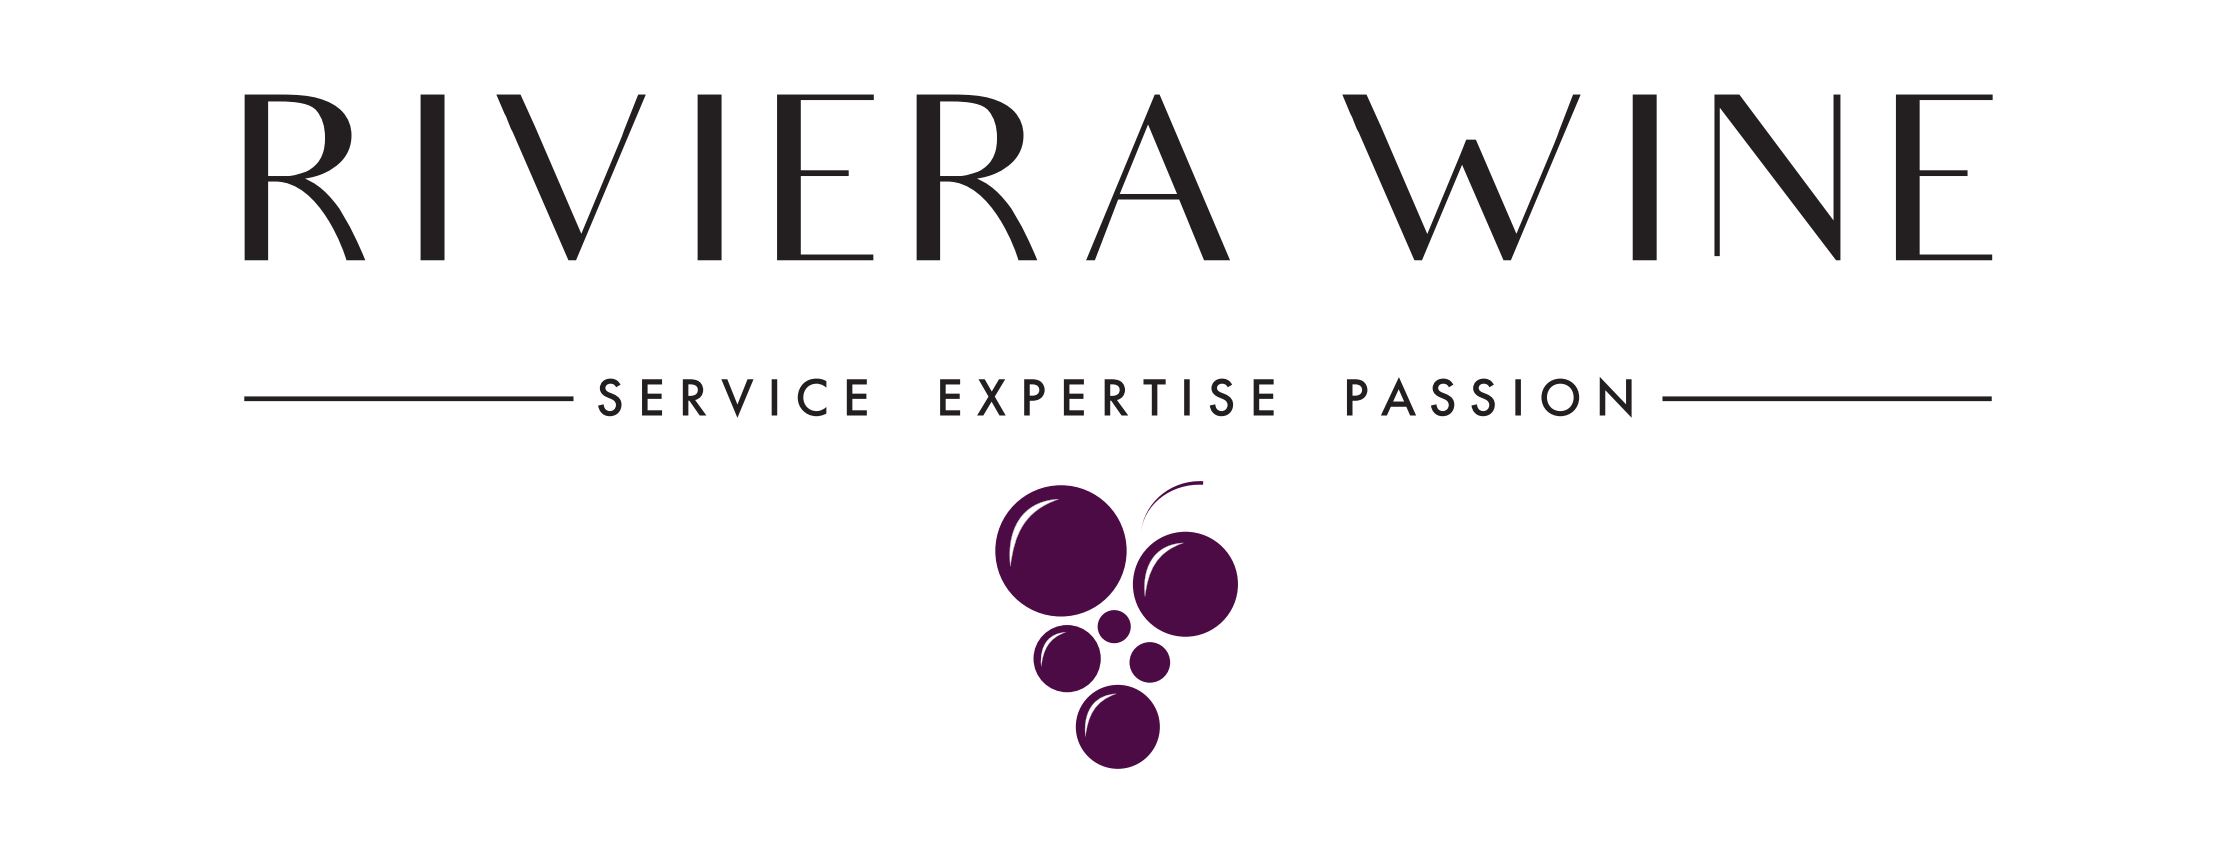 RIVIERA WINE logo